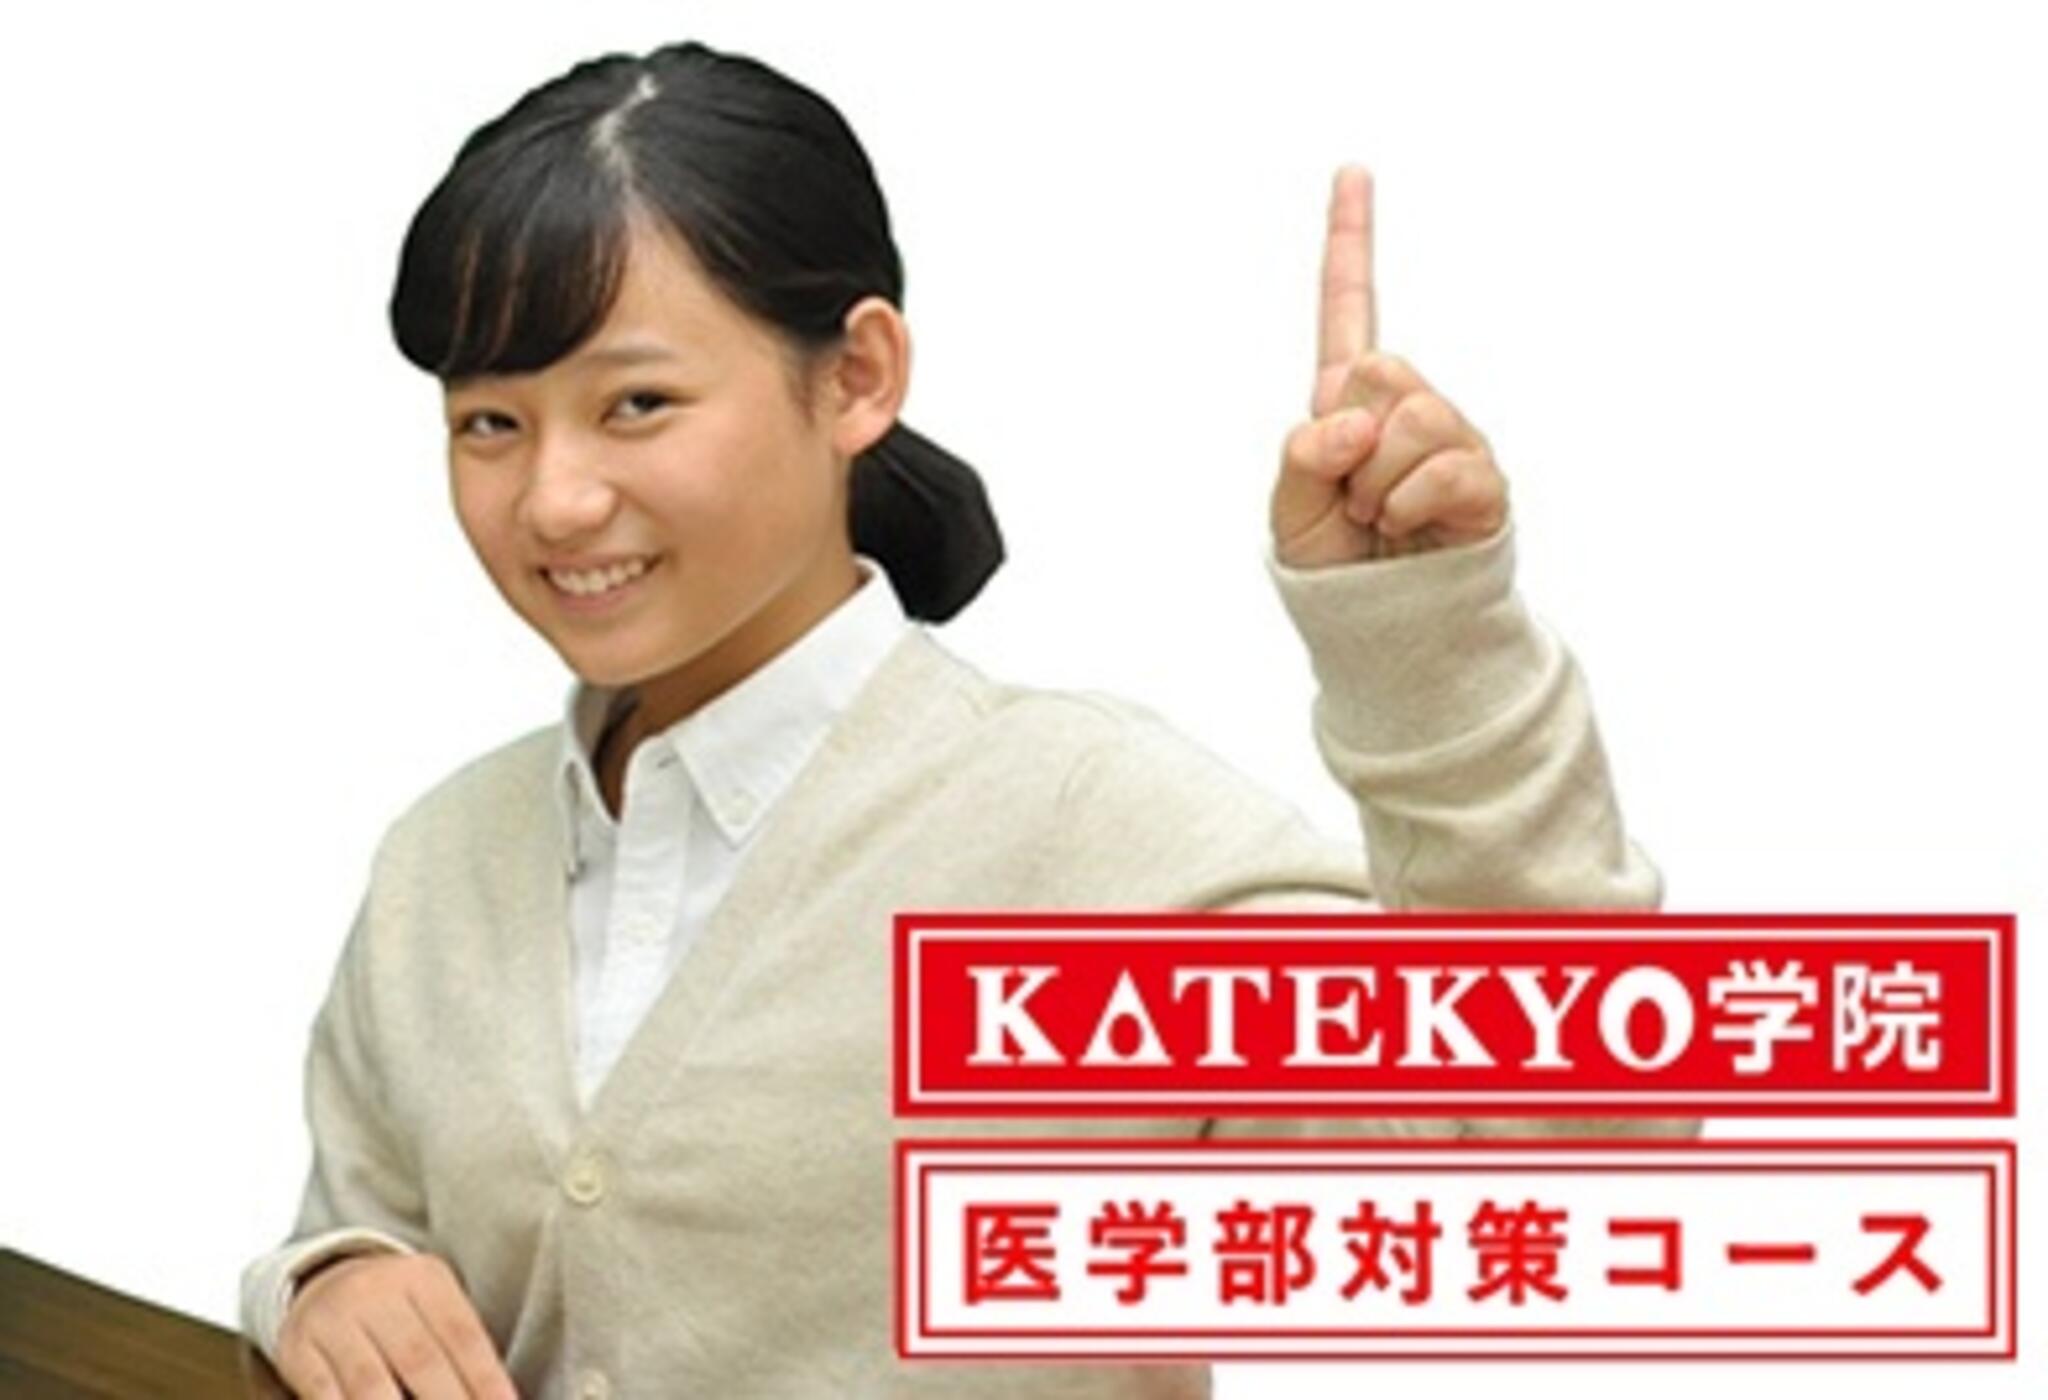 KATEKYO学院 医学部対策コース 相馬駅前校の代表写真1